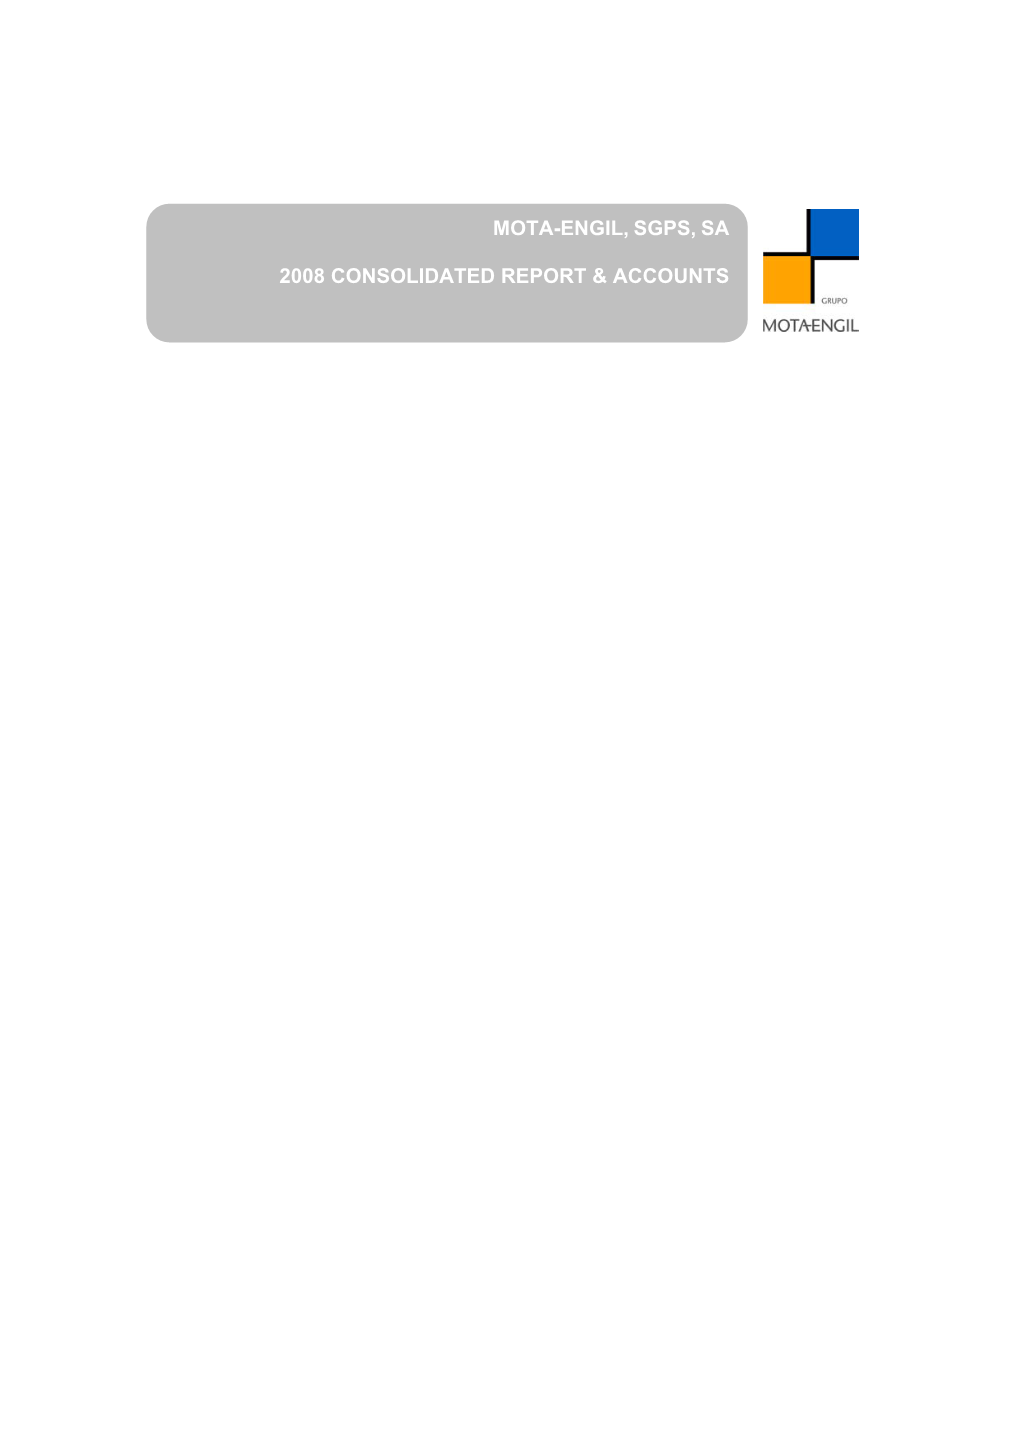 Mota-Engil, Sgps, Sa 2008 Consolidated Report & Accounts